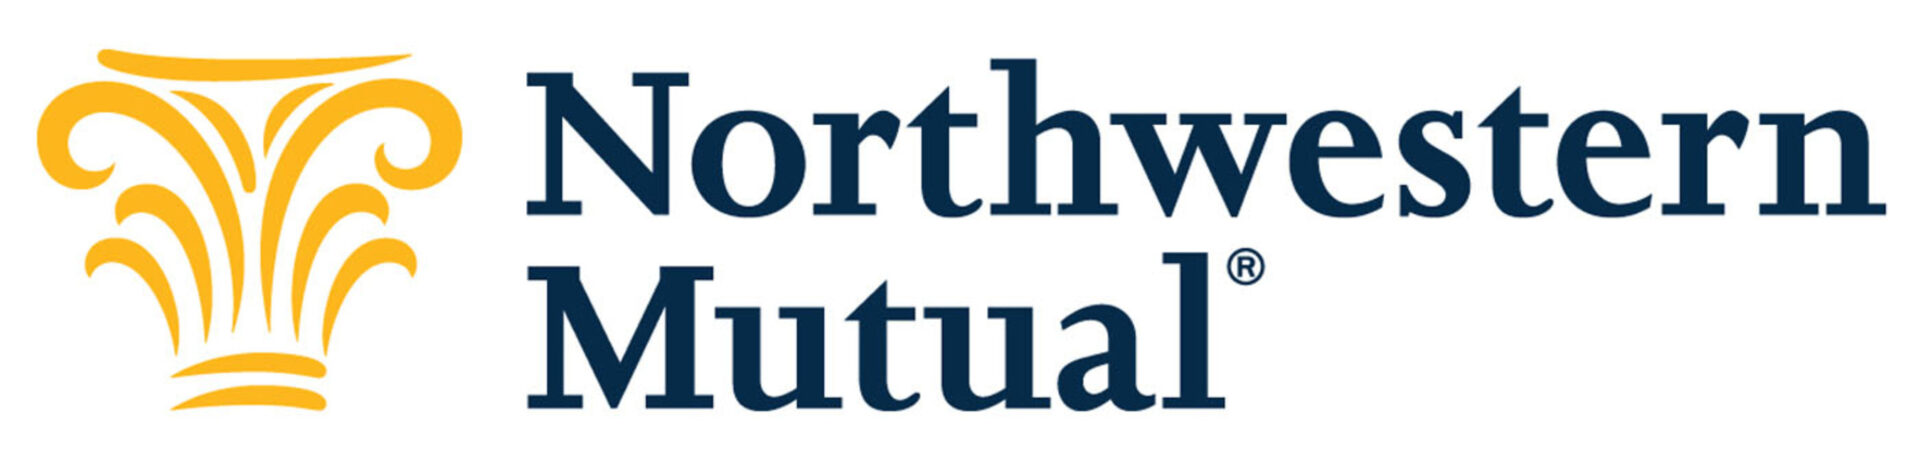 Northwestern Mutual  Insurance logo